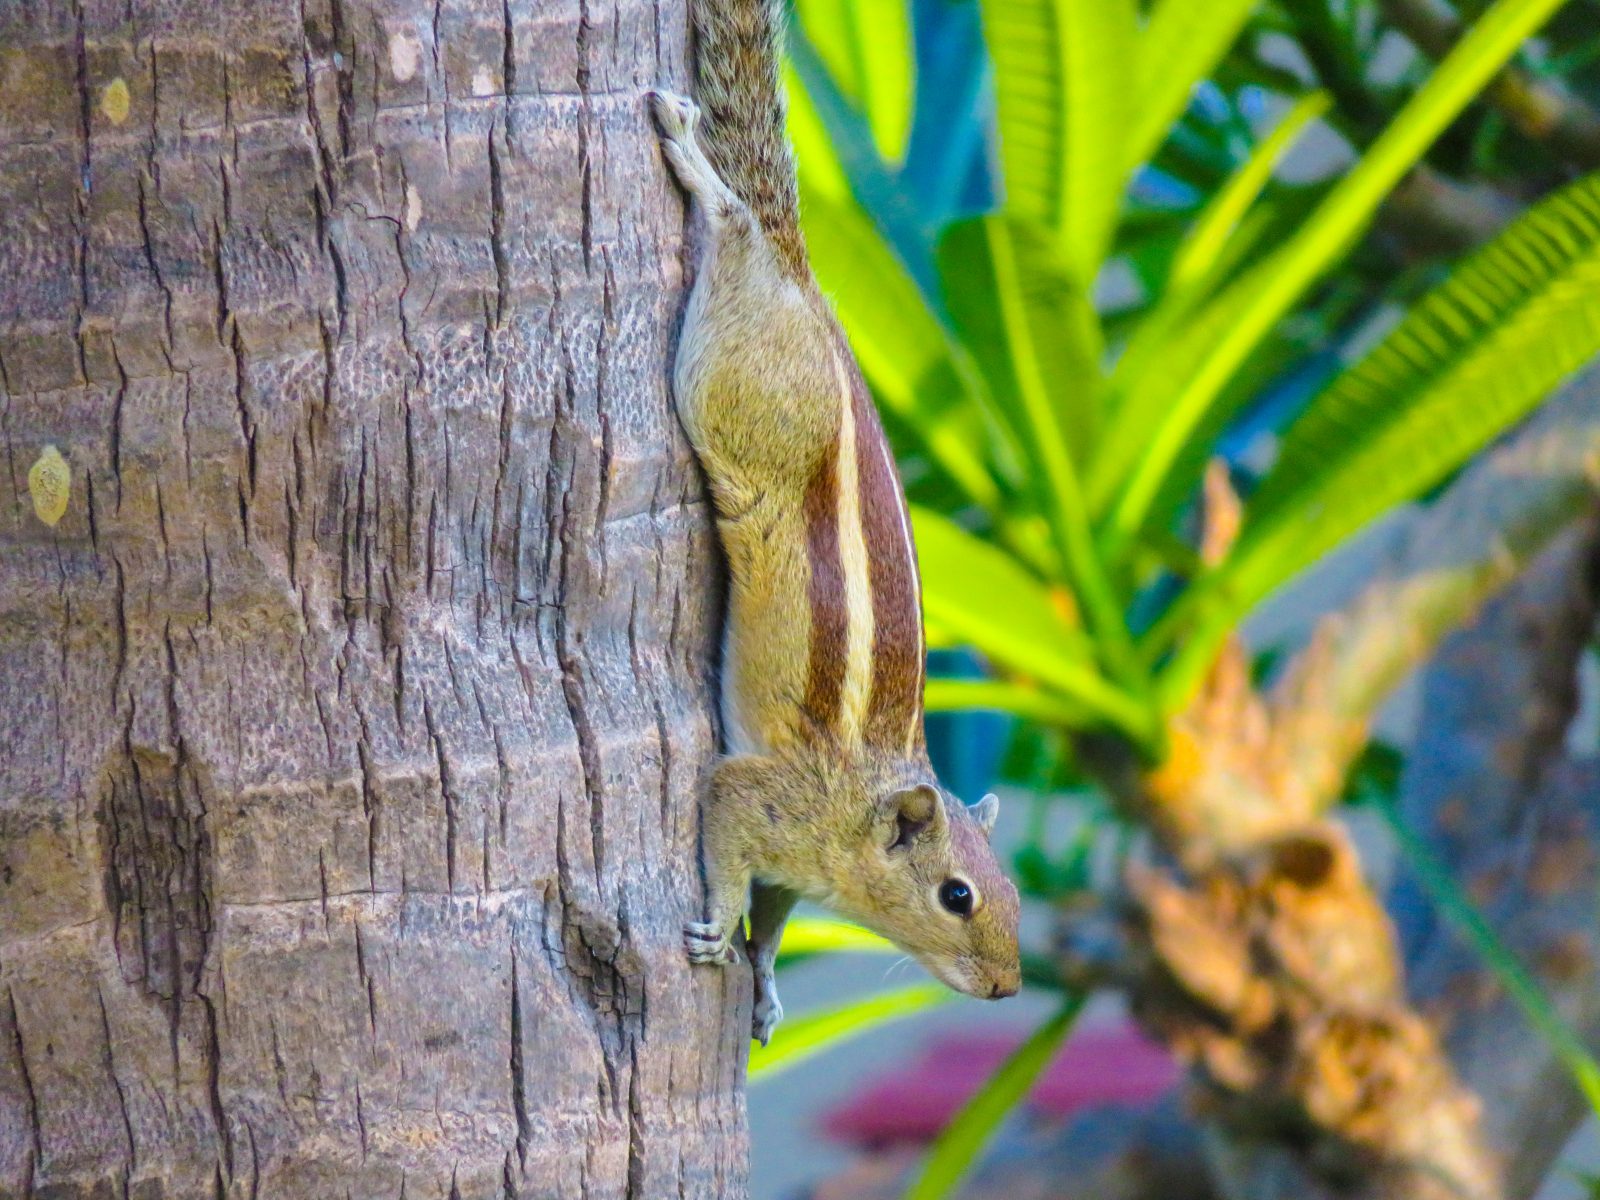 Squirrel Encounter - Free Stock Photos | Life of Pix